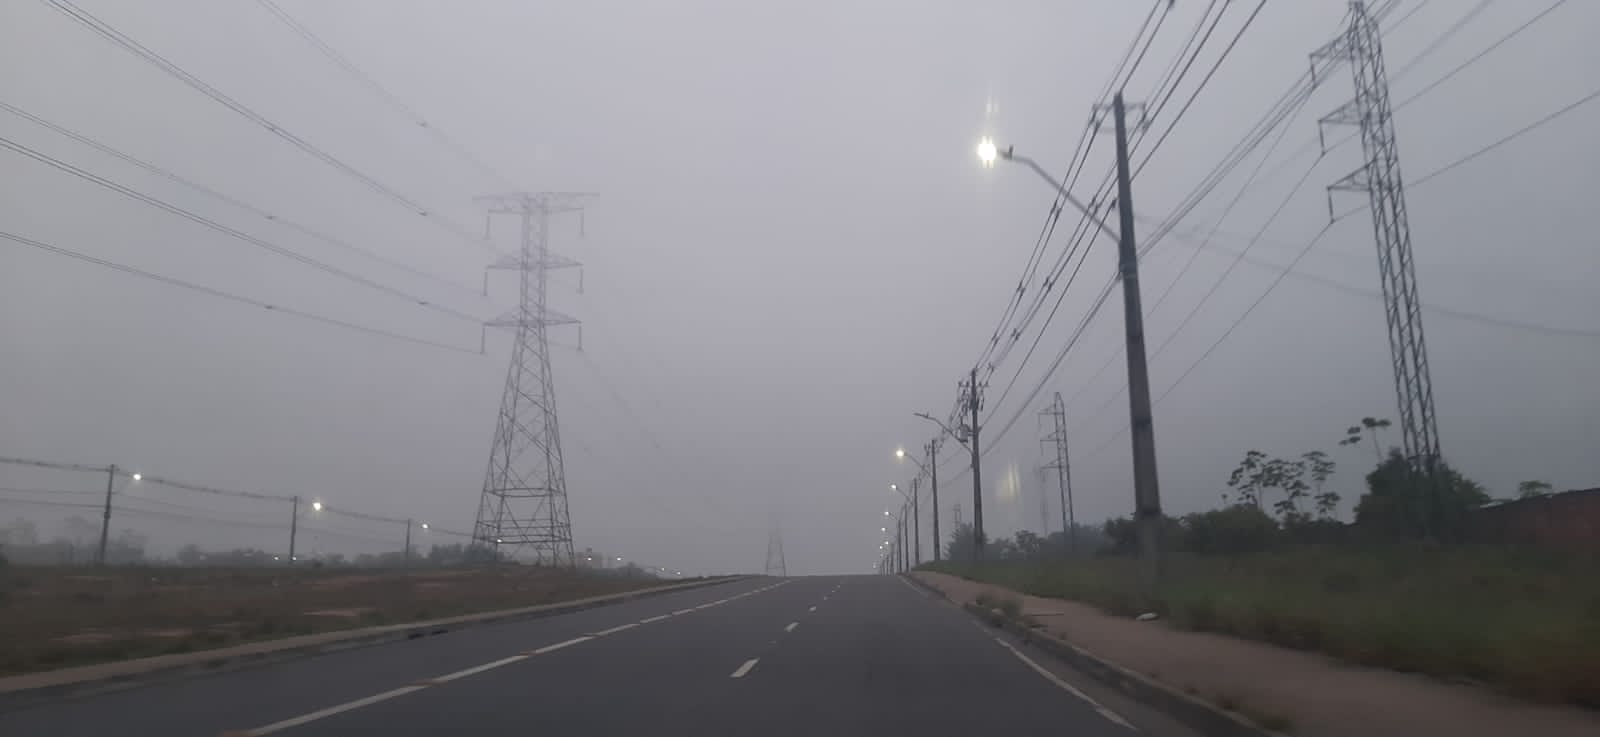 Neblina na Avenida das Torres na Zona Norte de Manaus - Foto: Ana Kelly Franco/ Portal Norte